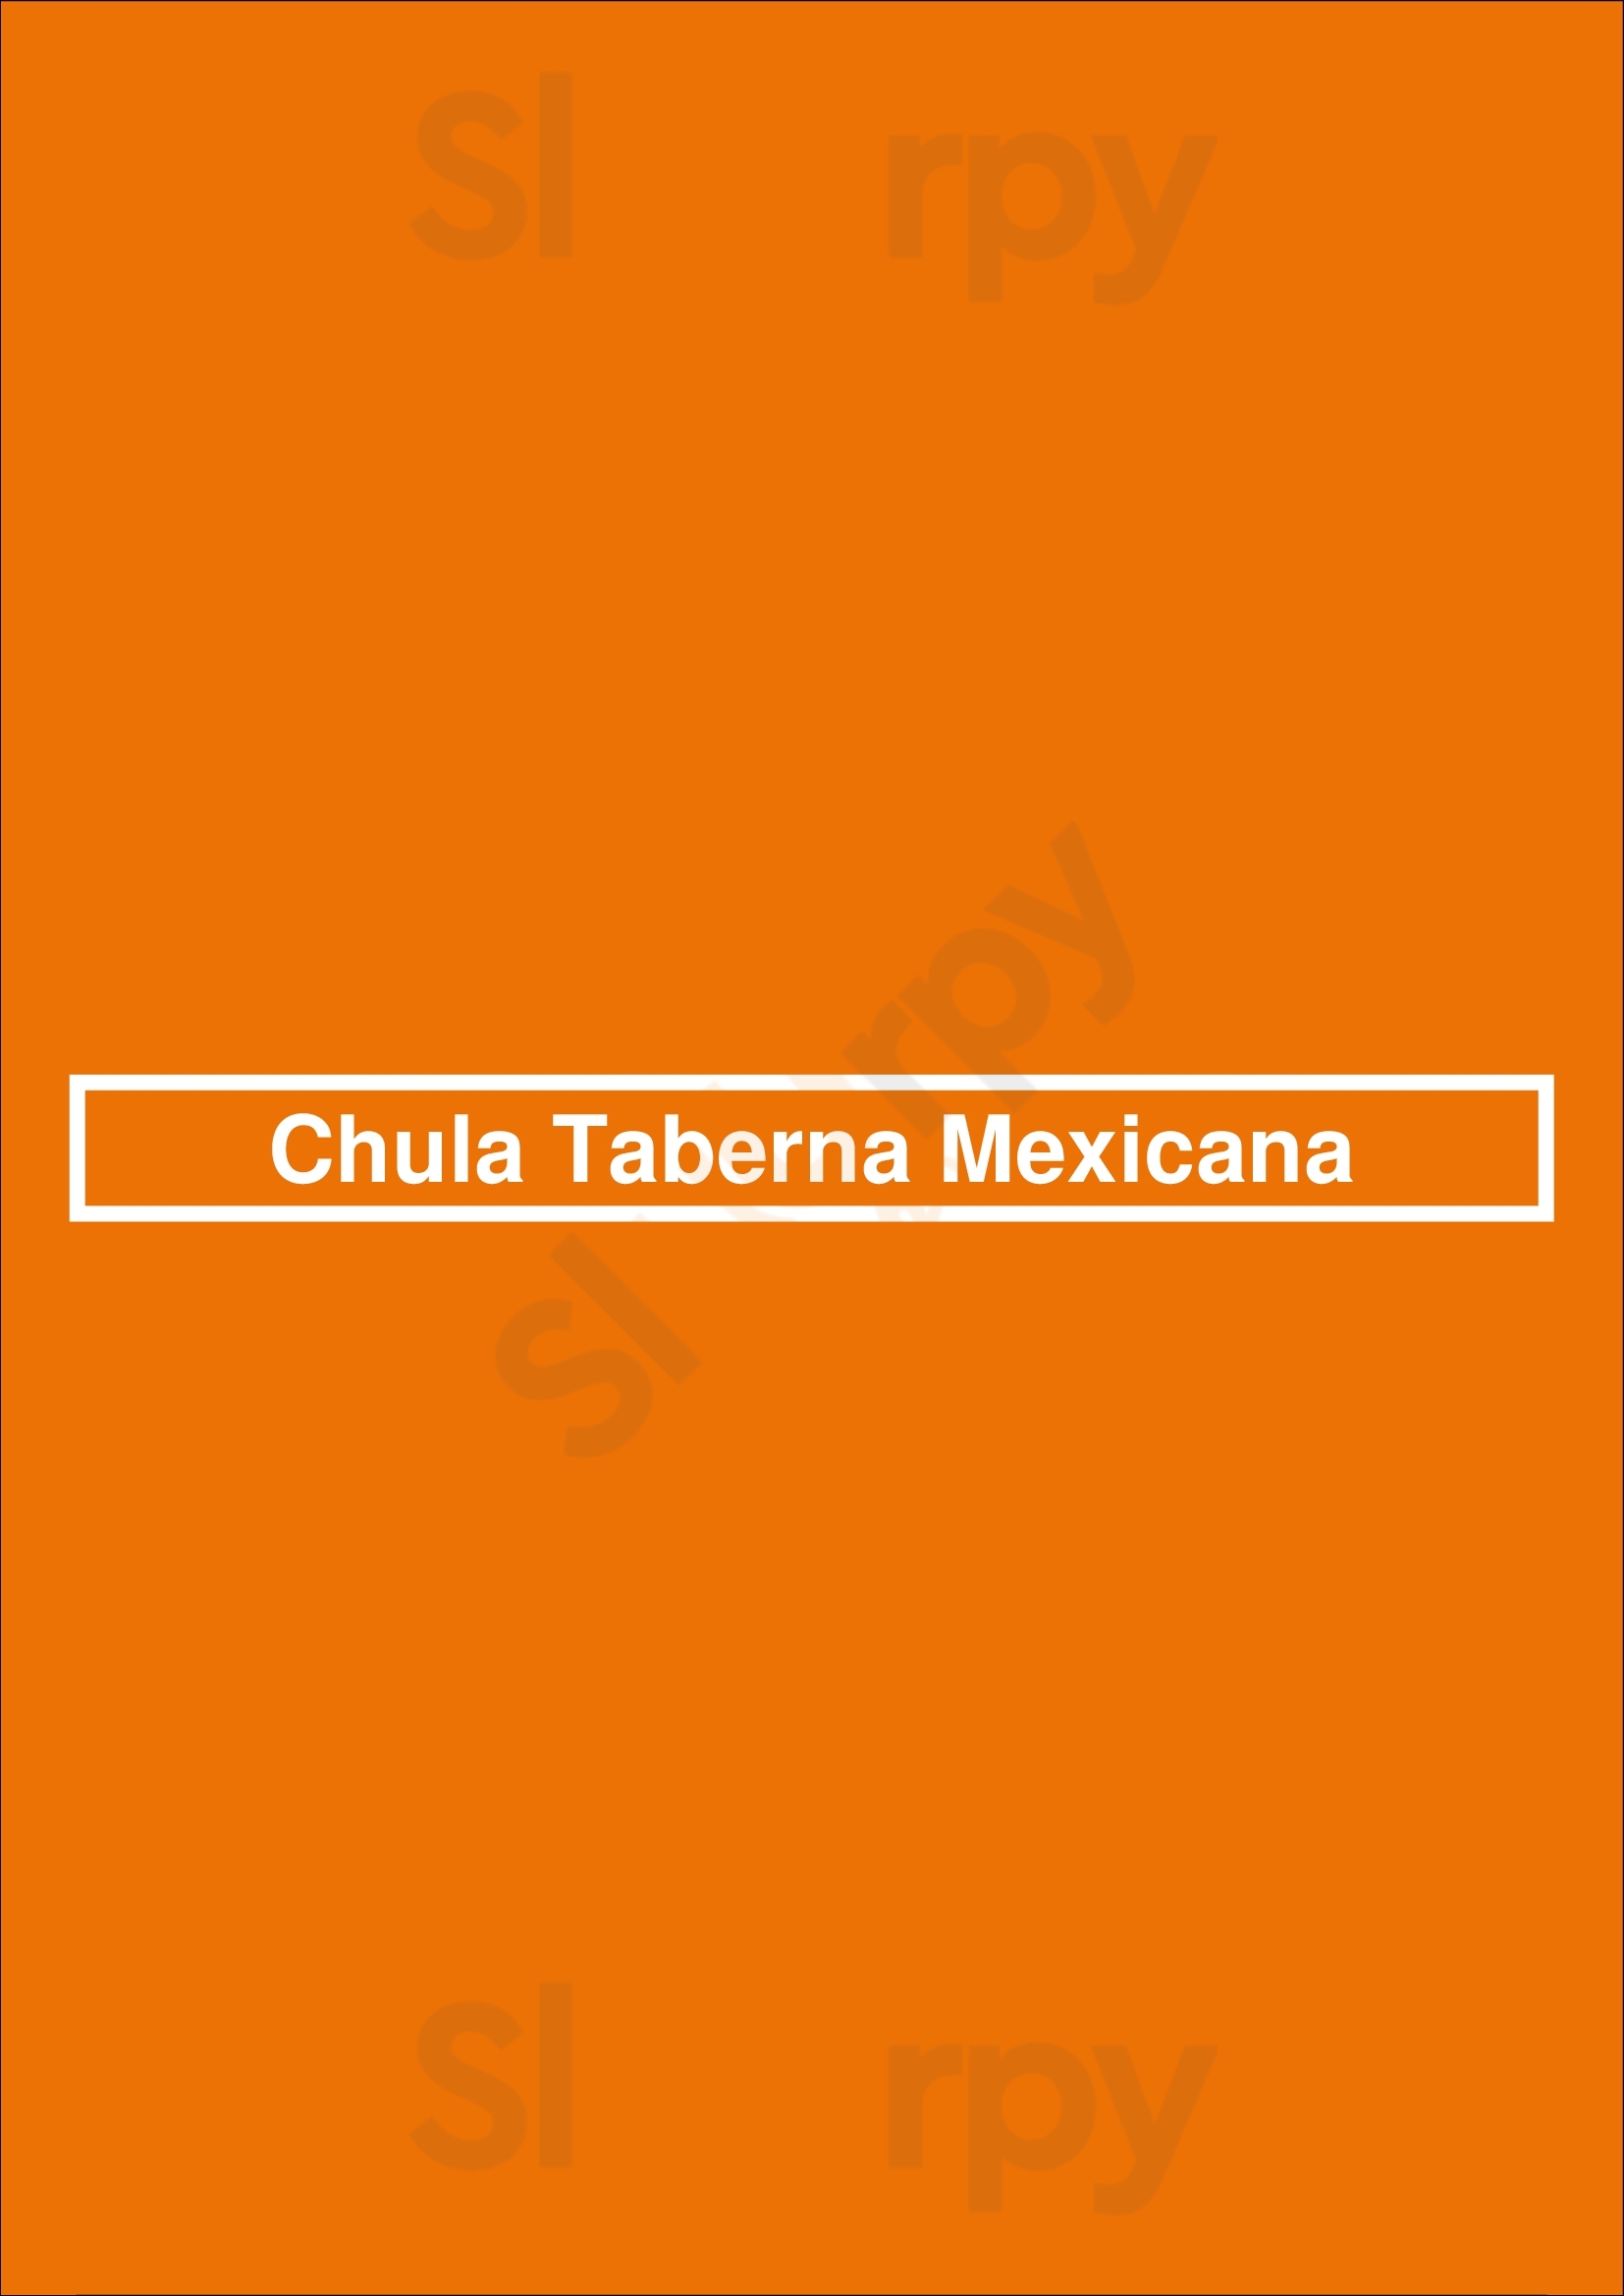 Chula Taberna Mexicana Toronto Menu - 1